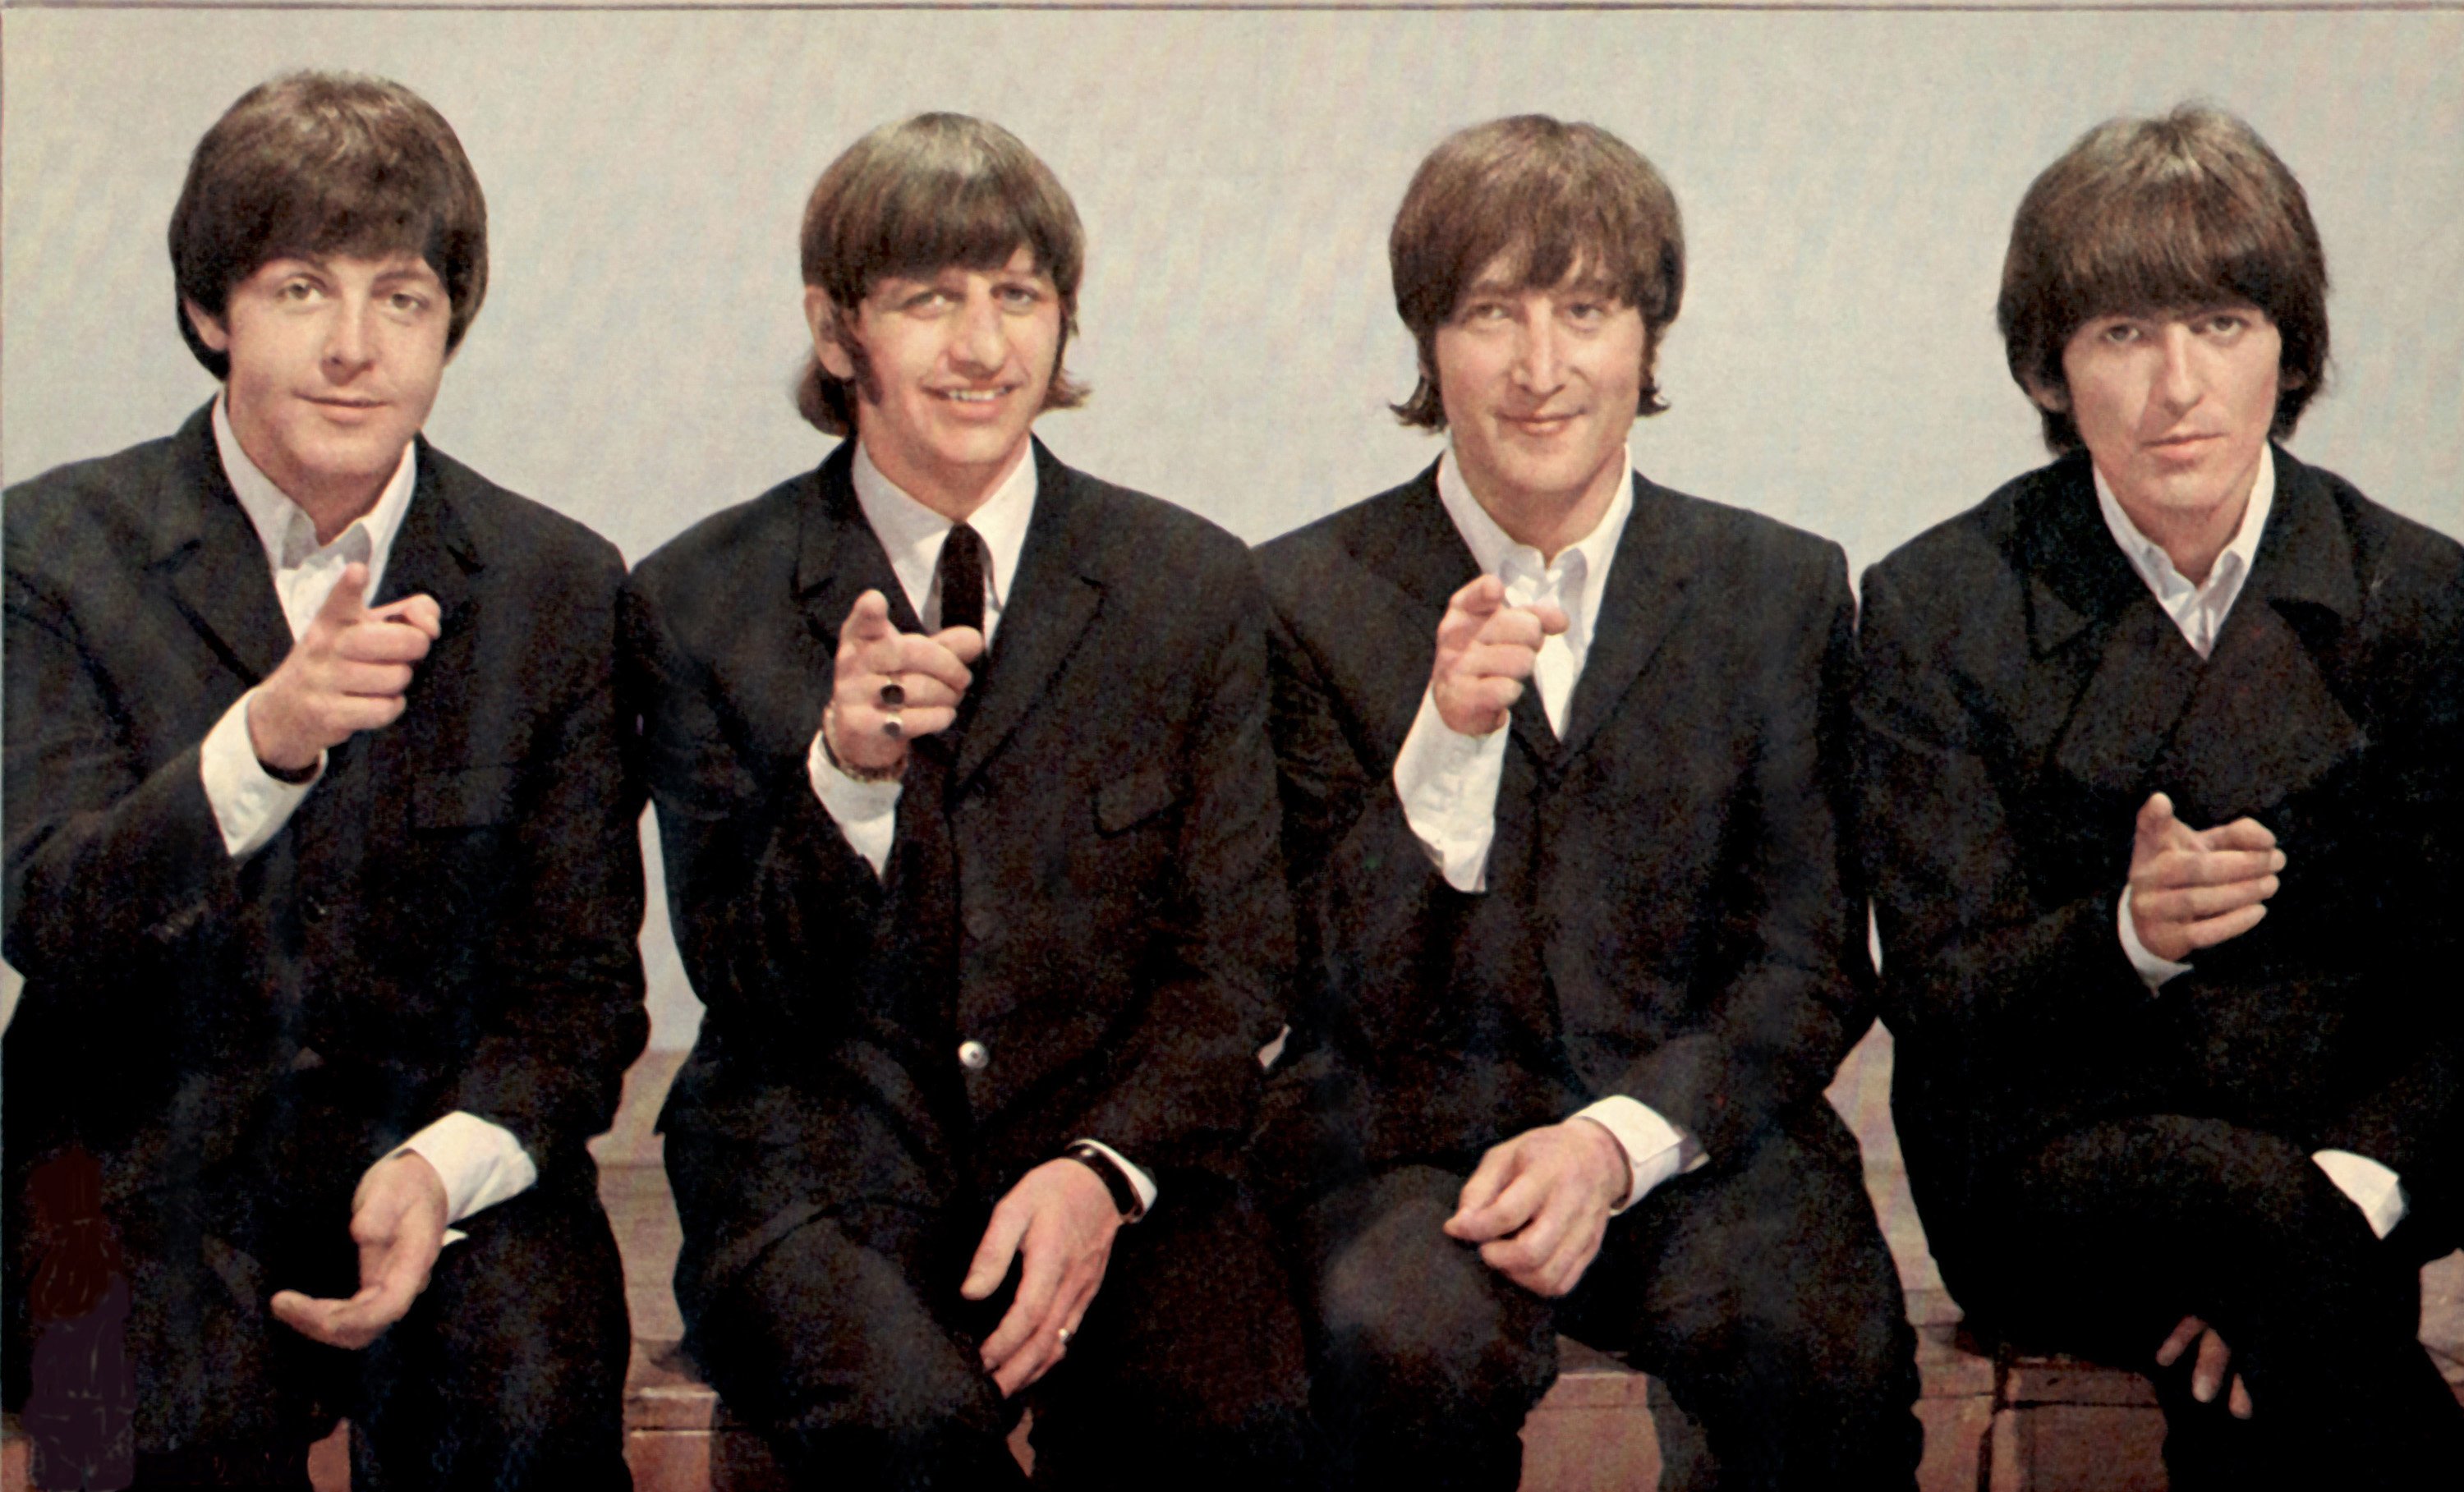 The Beatles' Paul McCartney, Ringo Starr, John Lennon, and George Harrison sitting in a row